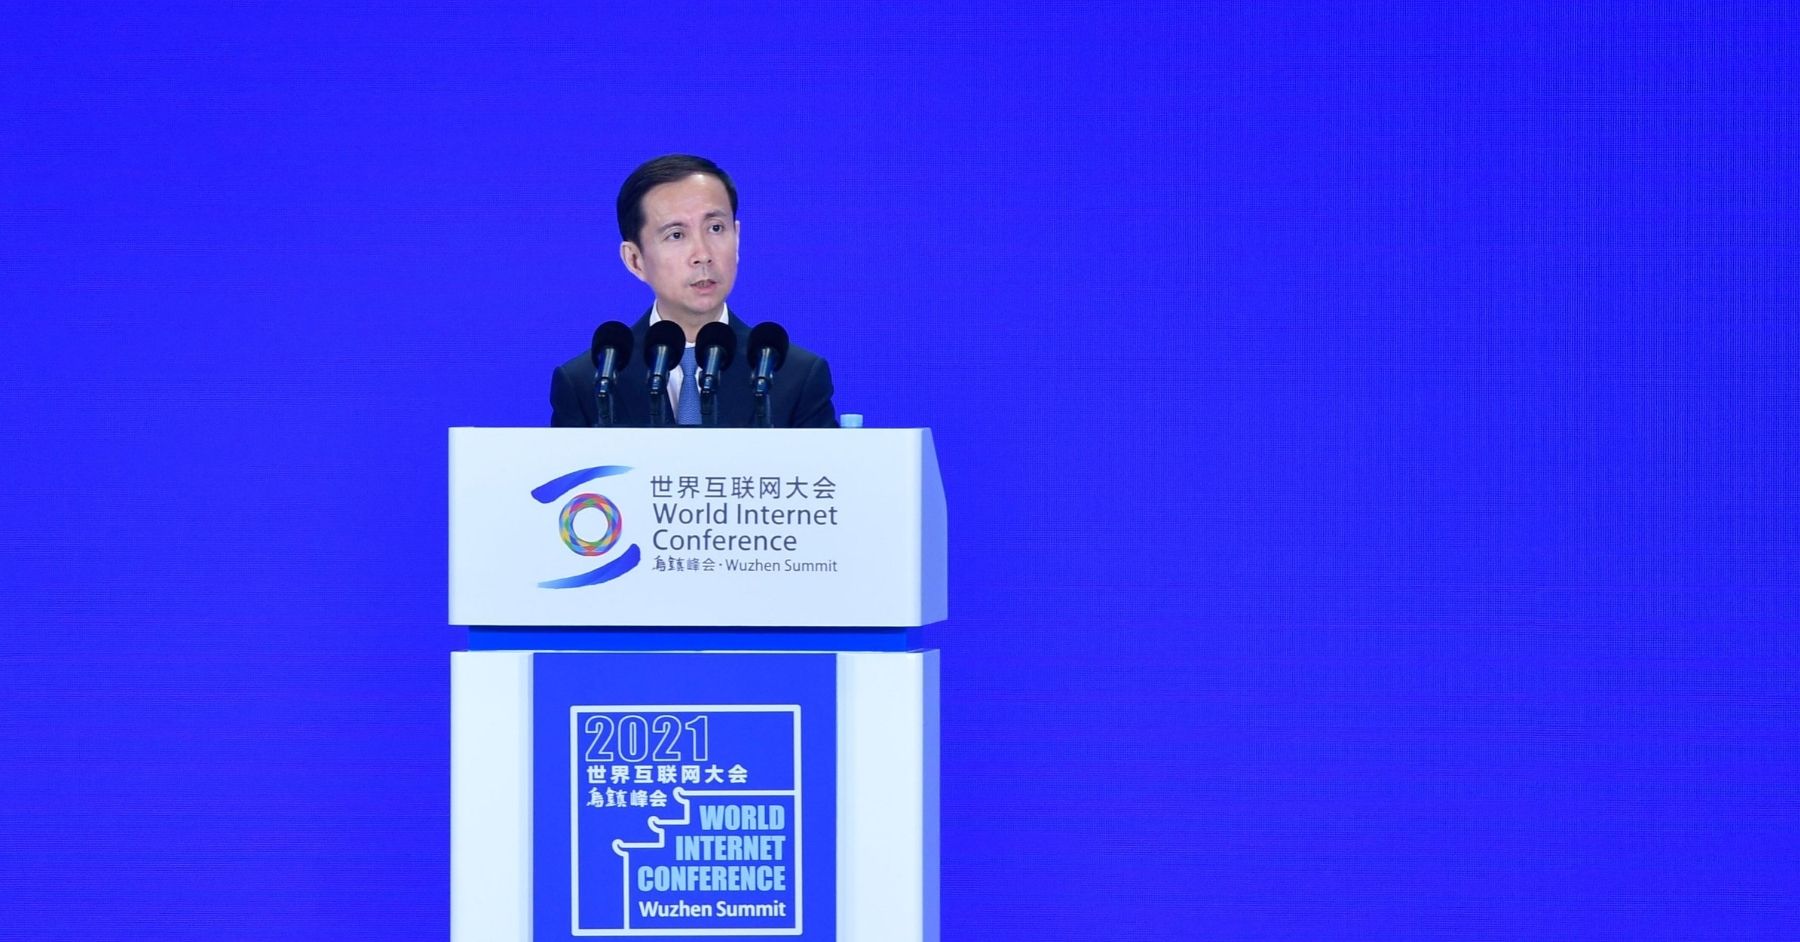 Daniel Zhang Alibaba World Internet Conference Wuzhen Summit